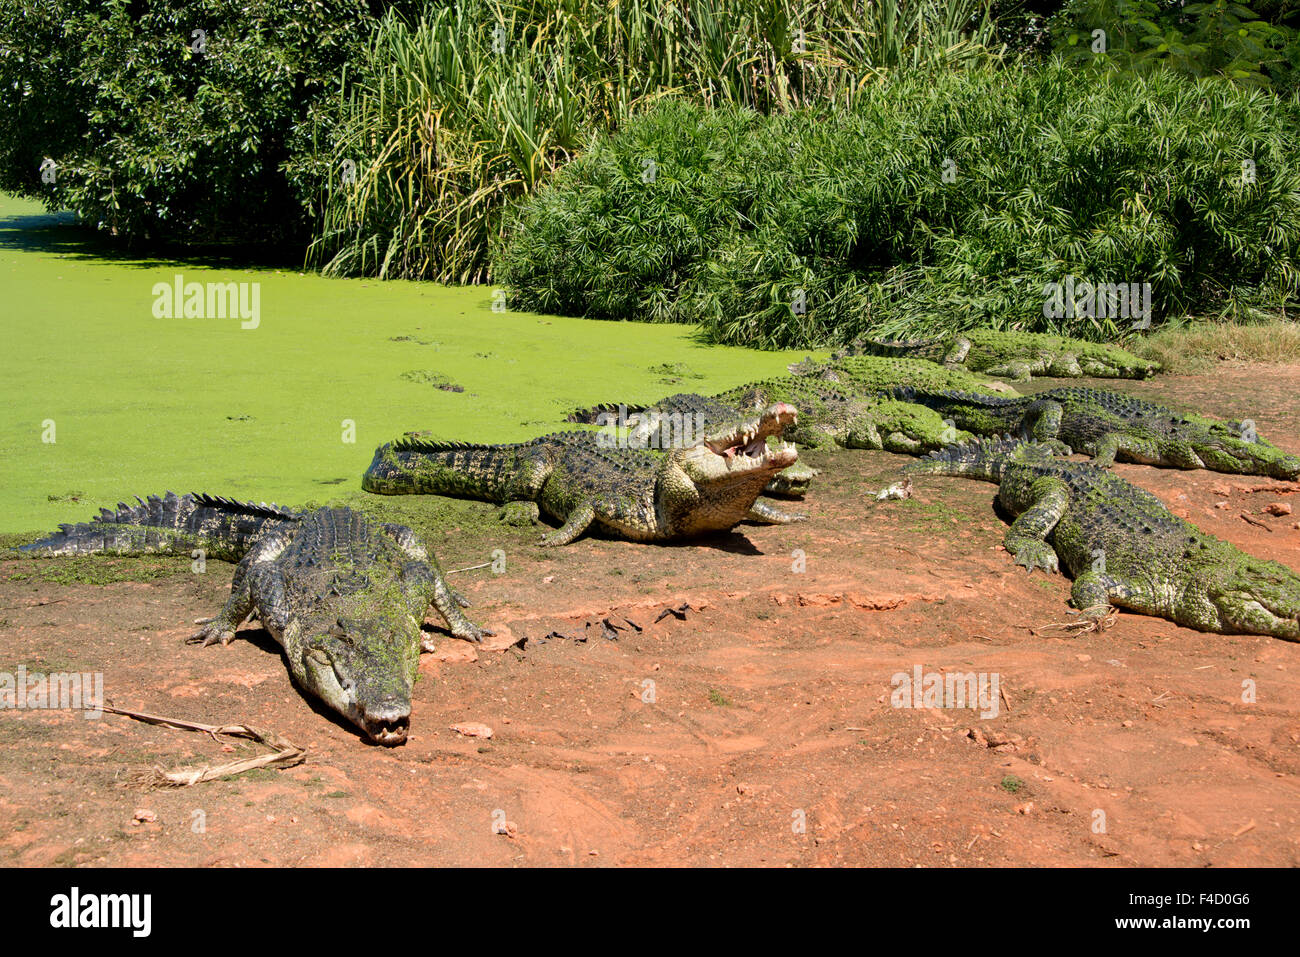 Australia, Broome. Malcolm Douglas Crocodile Park. Large saltwater crocodiles (Crocodylus porosus) in front of duckweed covered pond (Lemna minuta). (Large format sizes available) Stock Photo